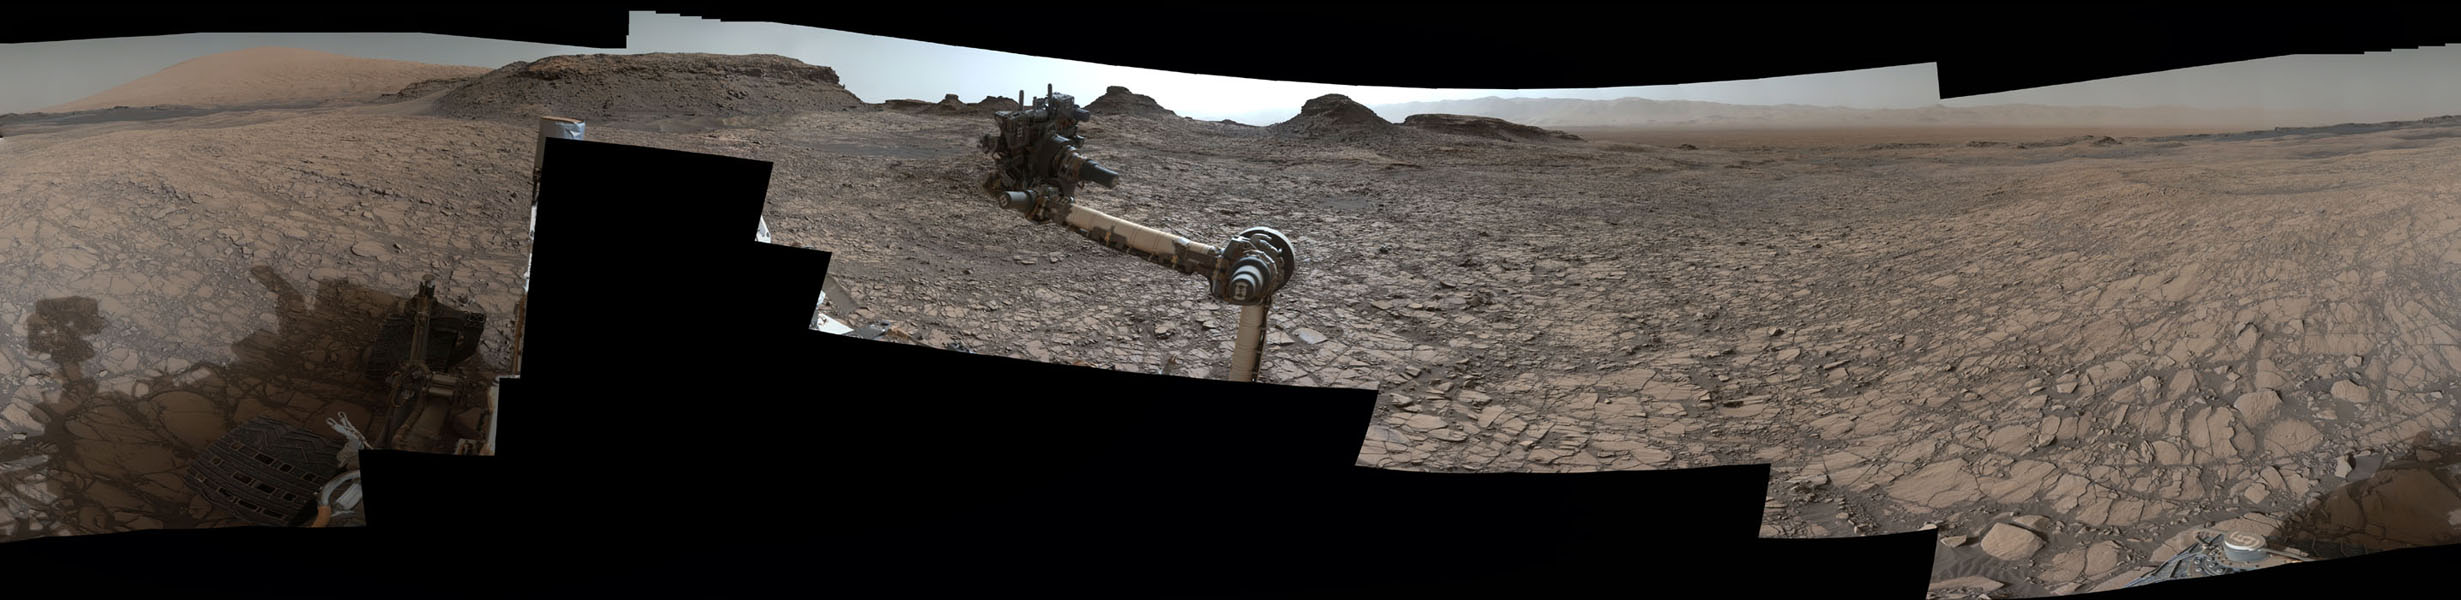 360 graders panorama view fra Curiosity-roveren